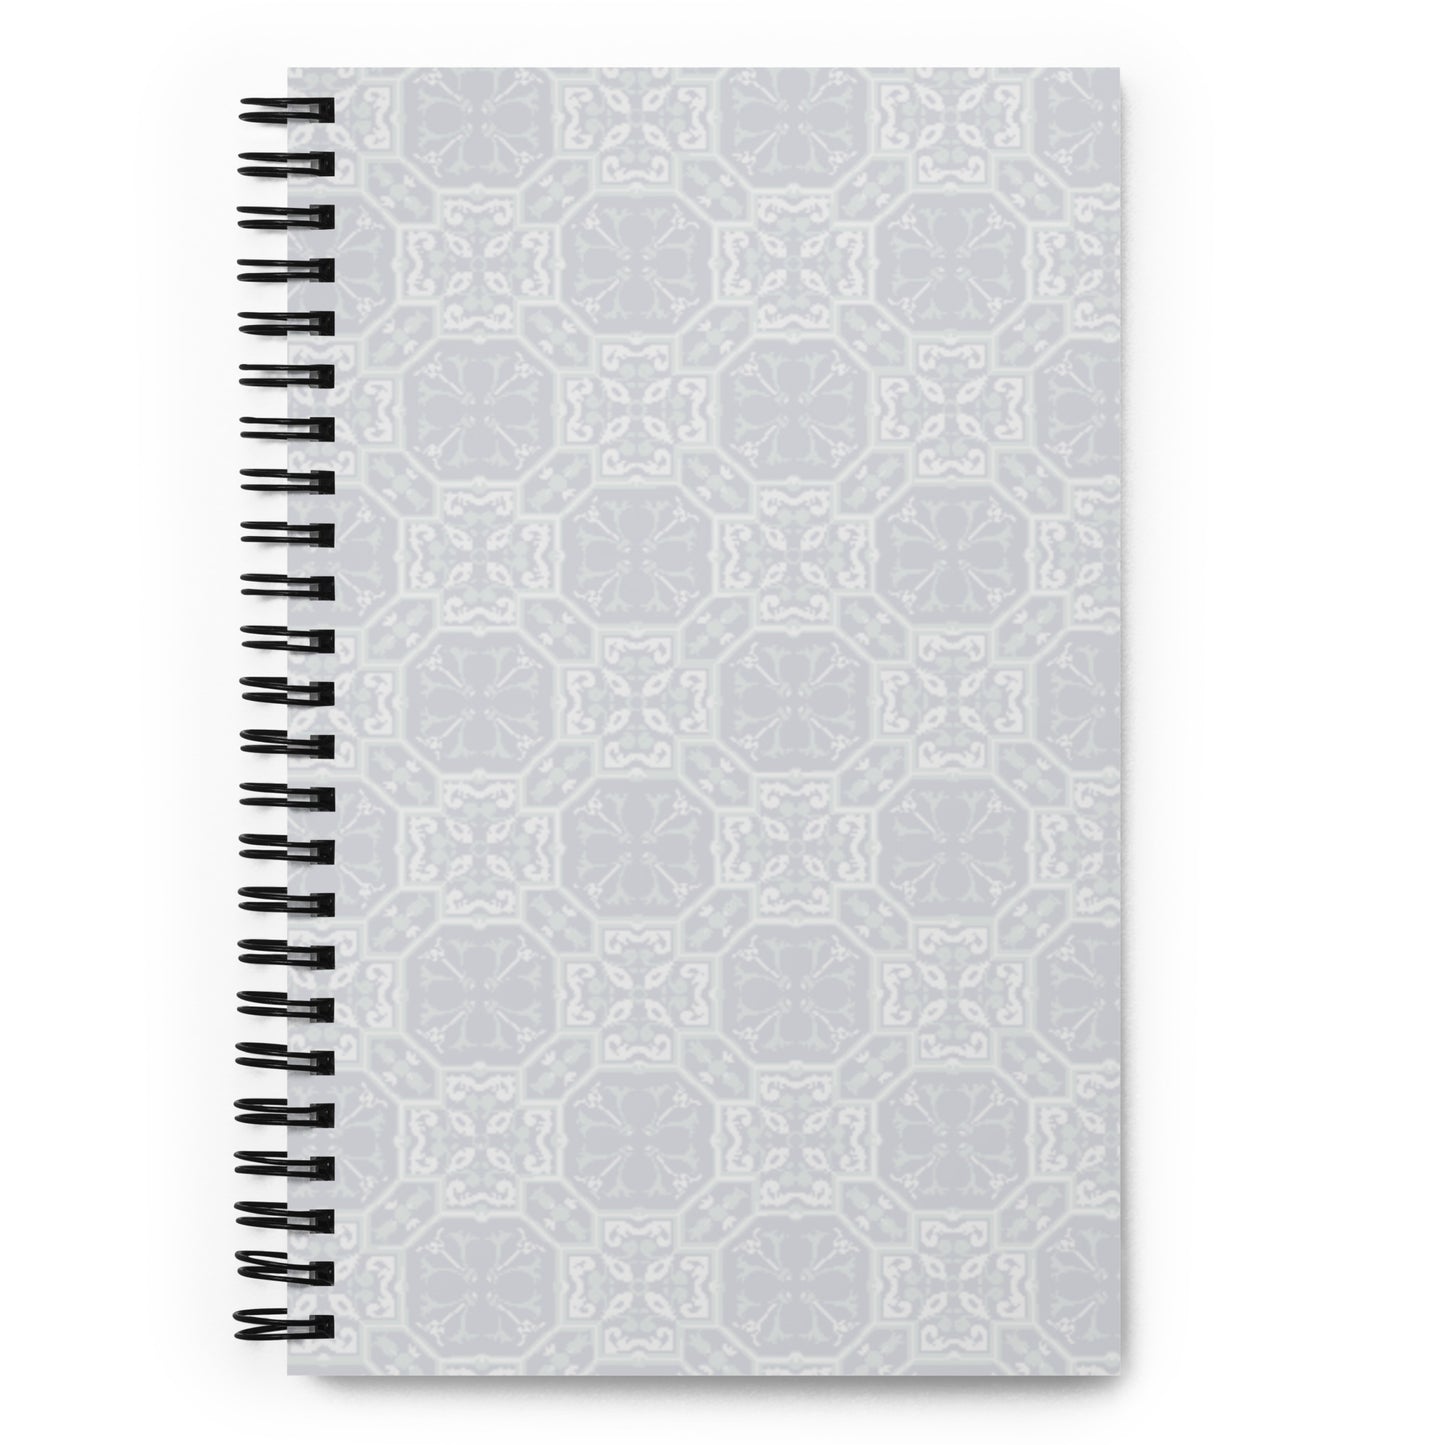 Gray Talavera Inspired Notebook